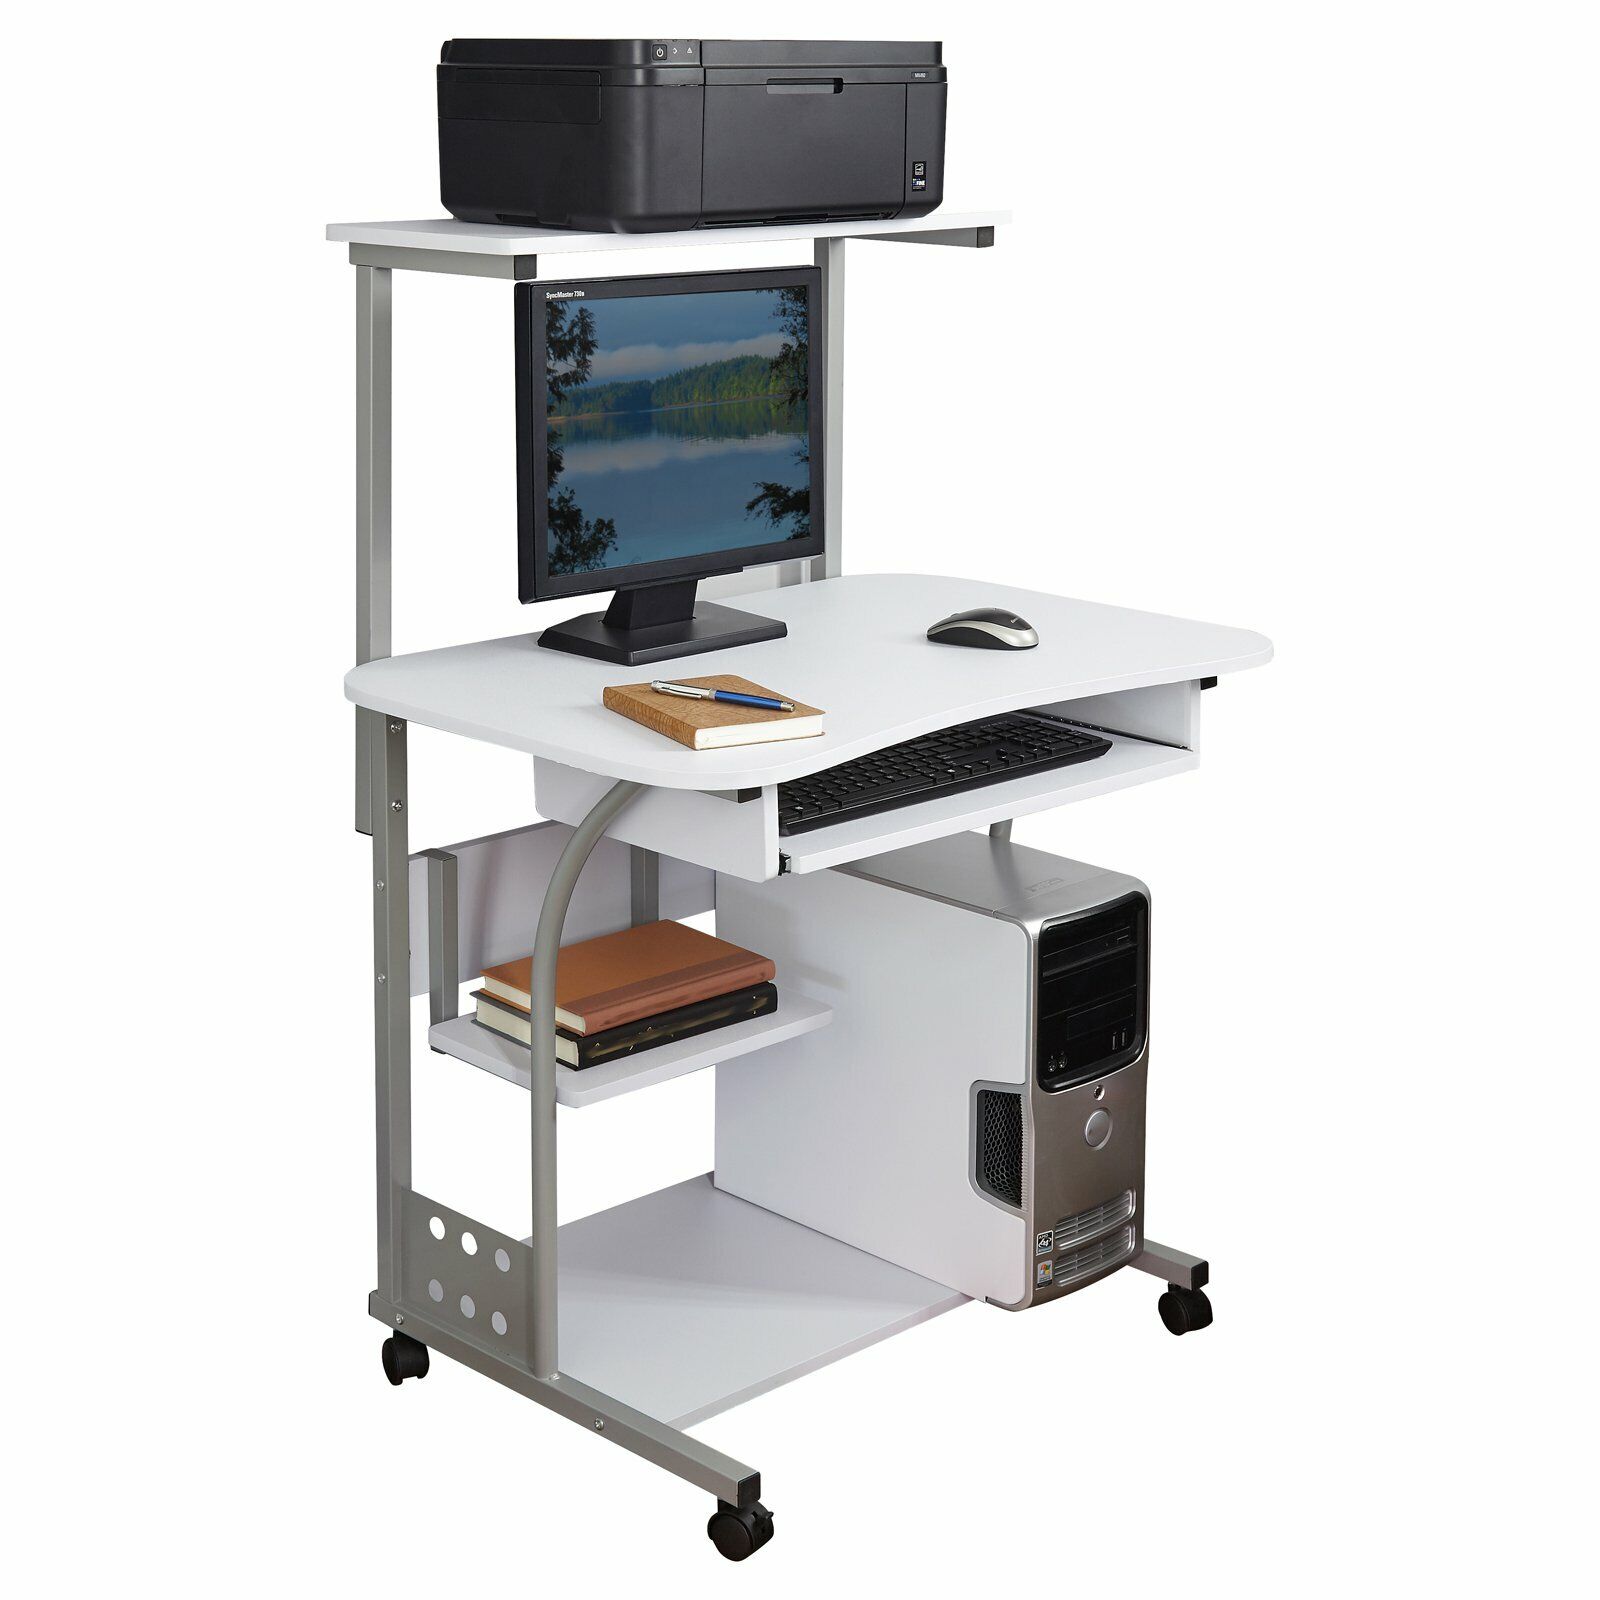 &nbsp; White Mobile Computer Tower Desk Printer Shelf Laptop Table Top Home Office Cart